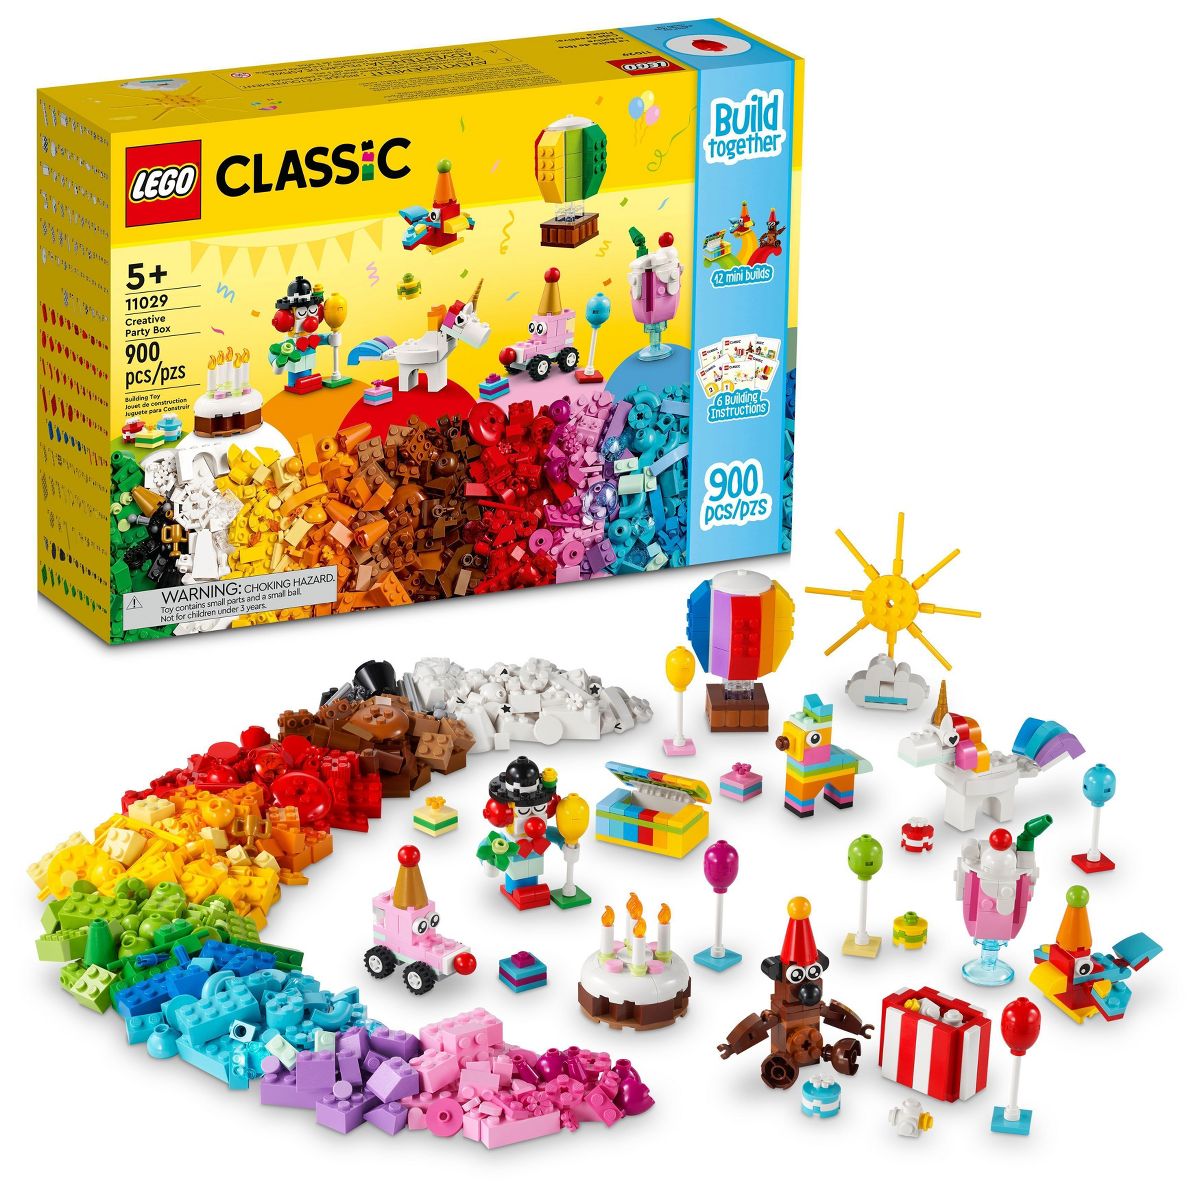 Lego creative party box